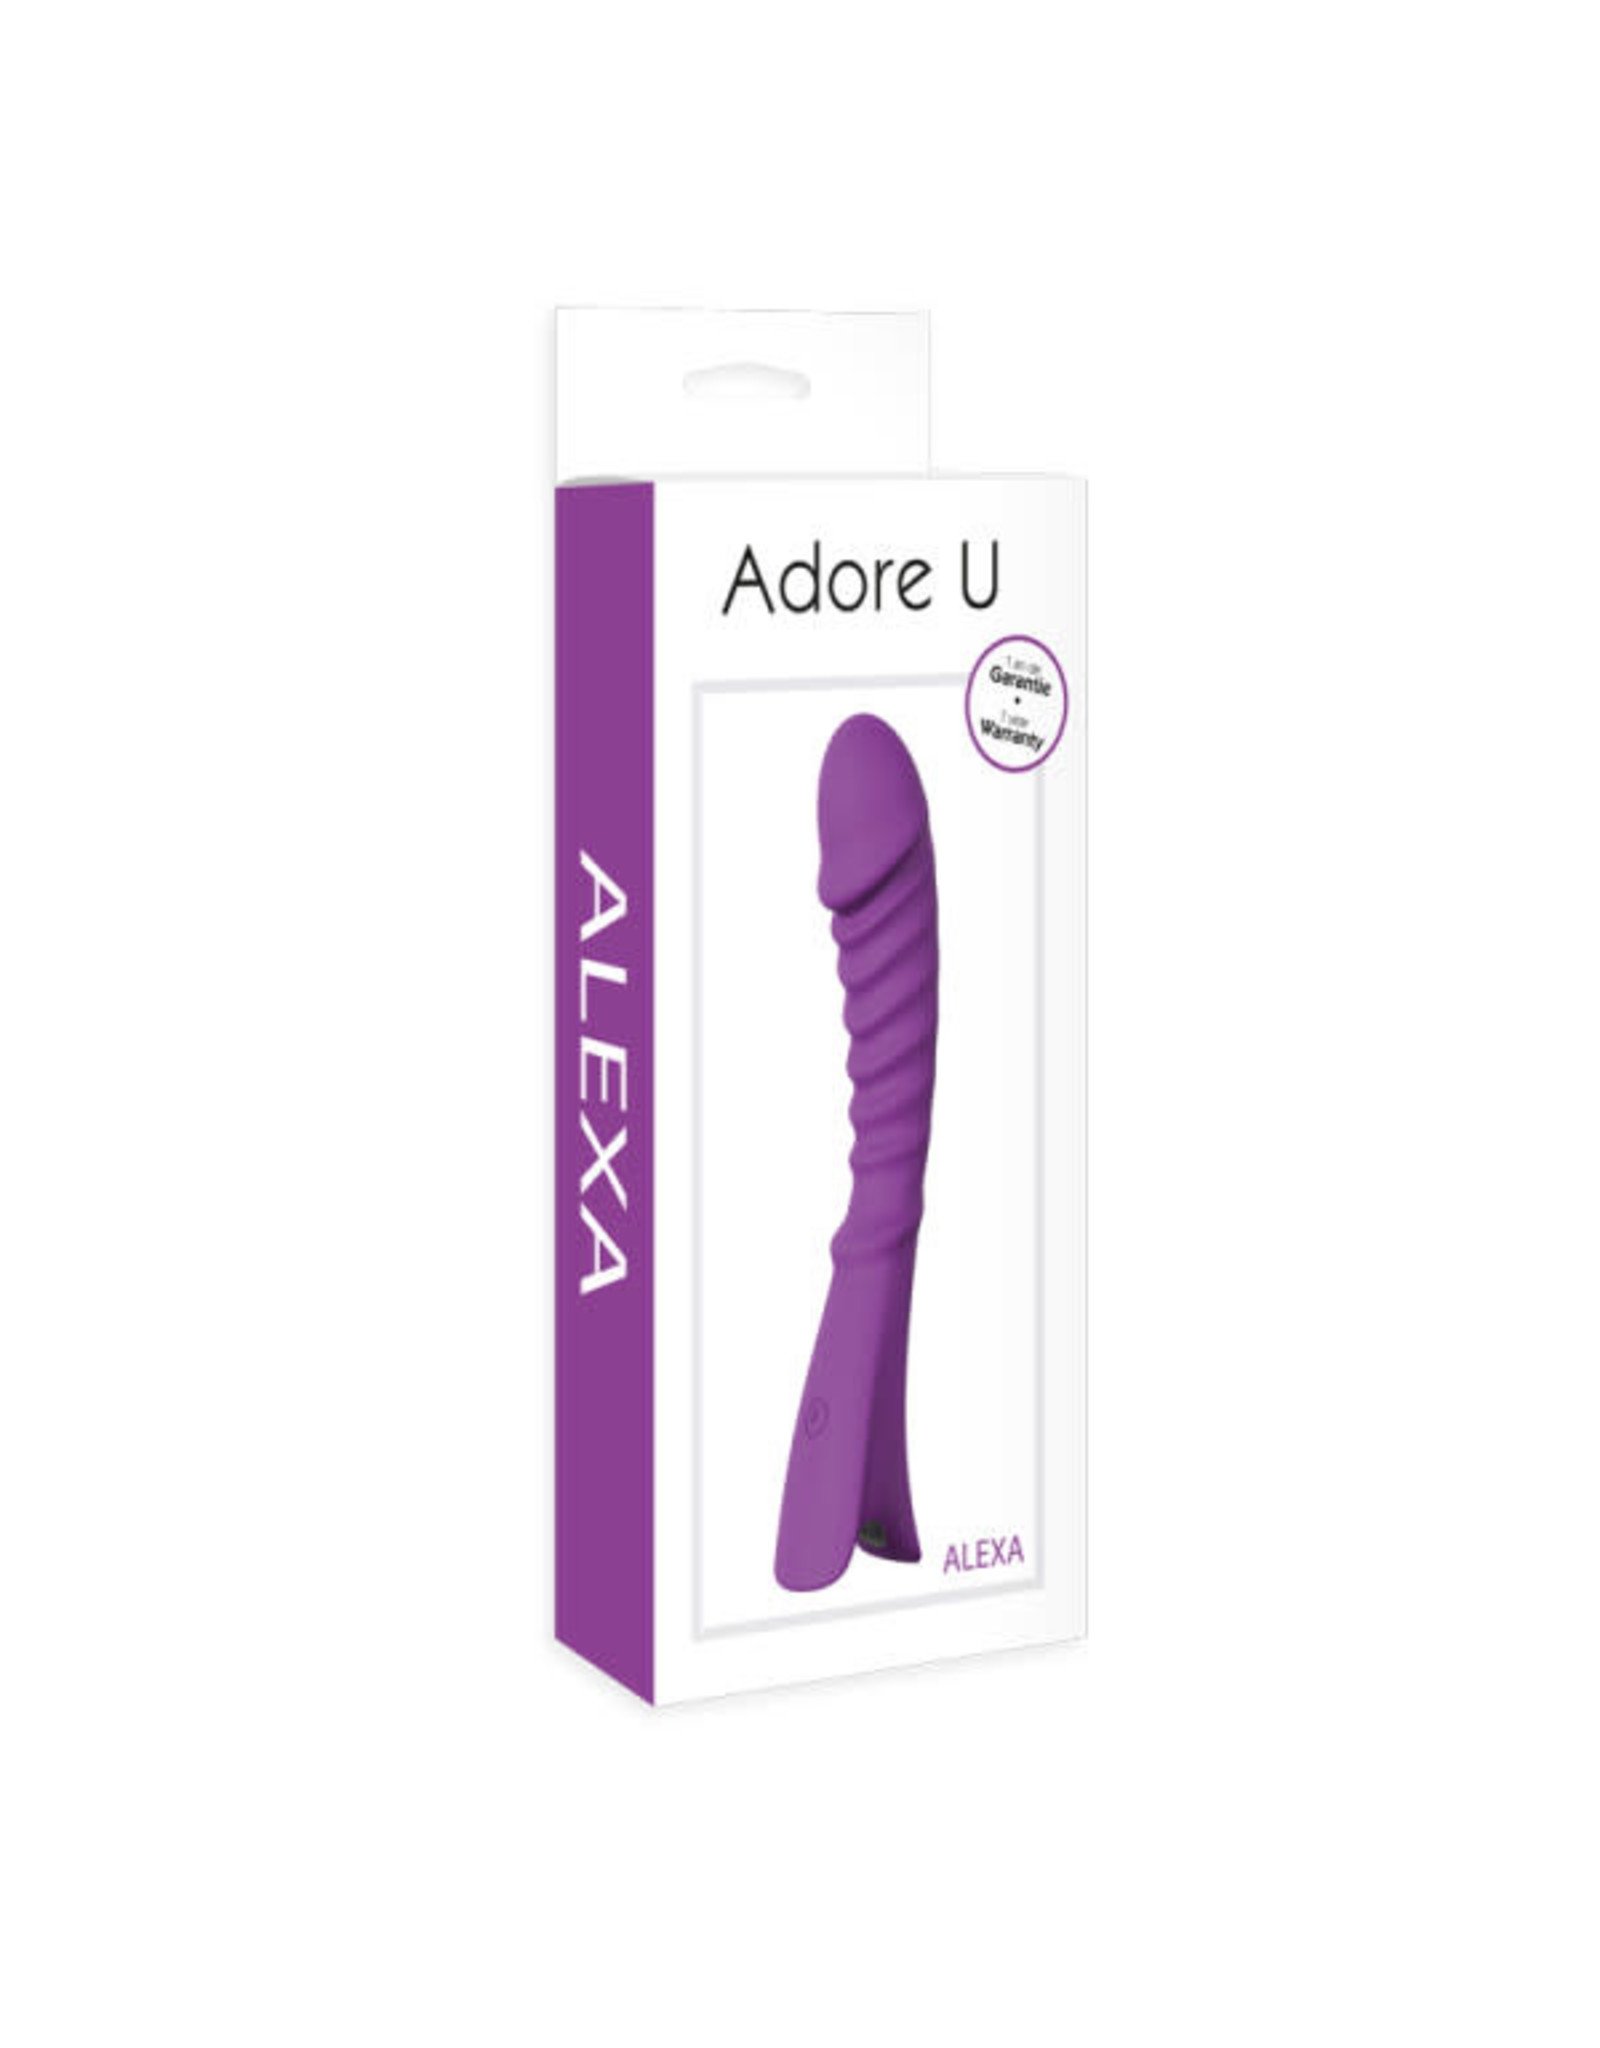 Adore U Adore U - Alexa - Purple